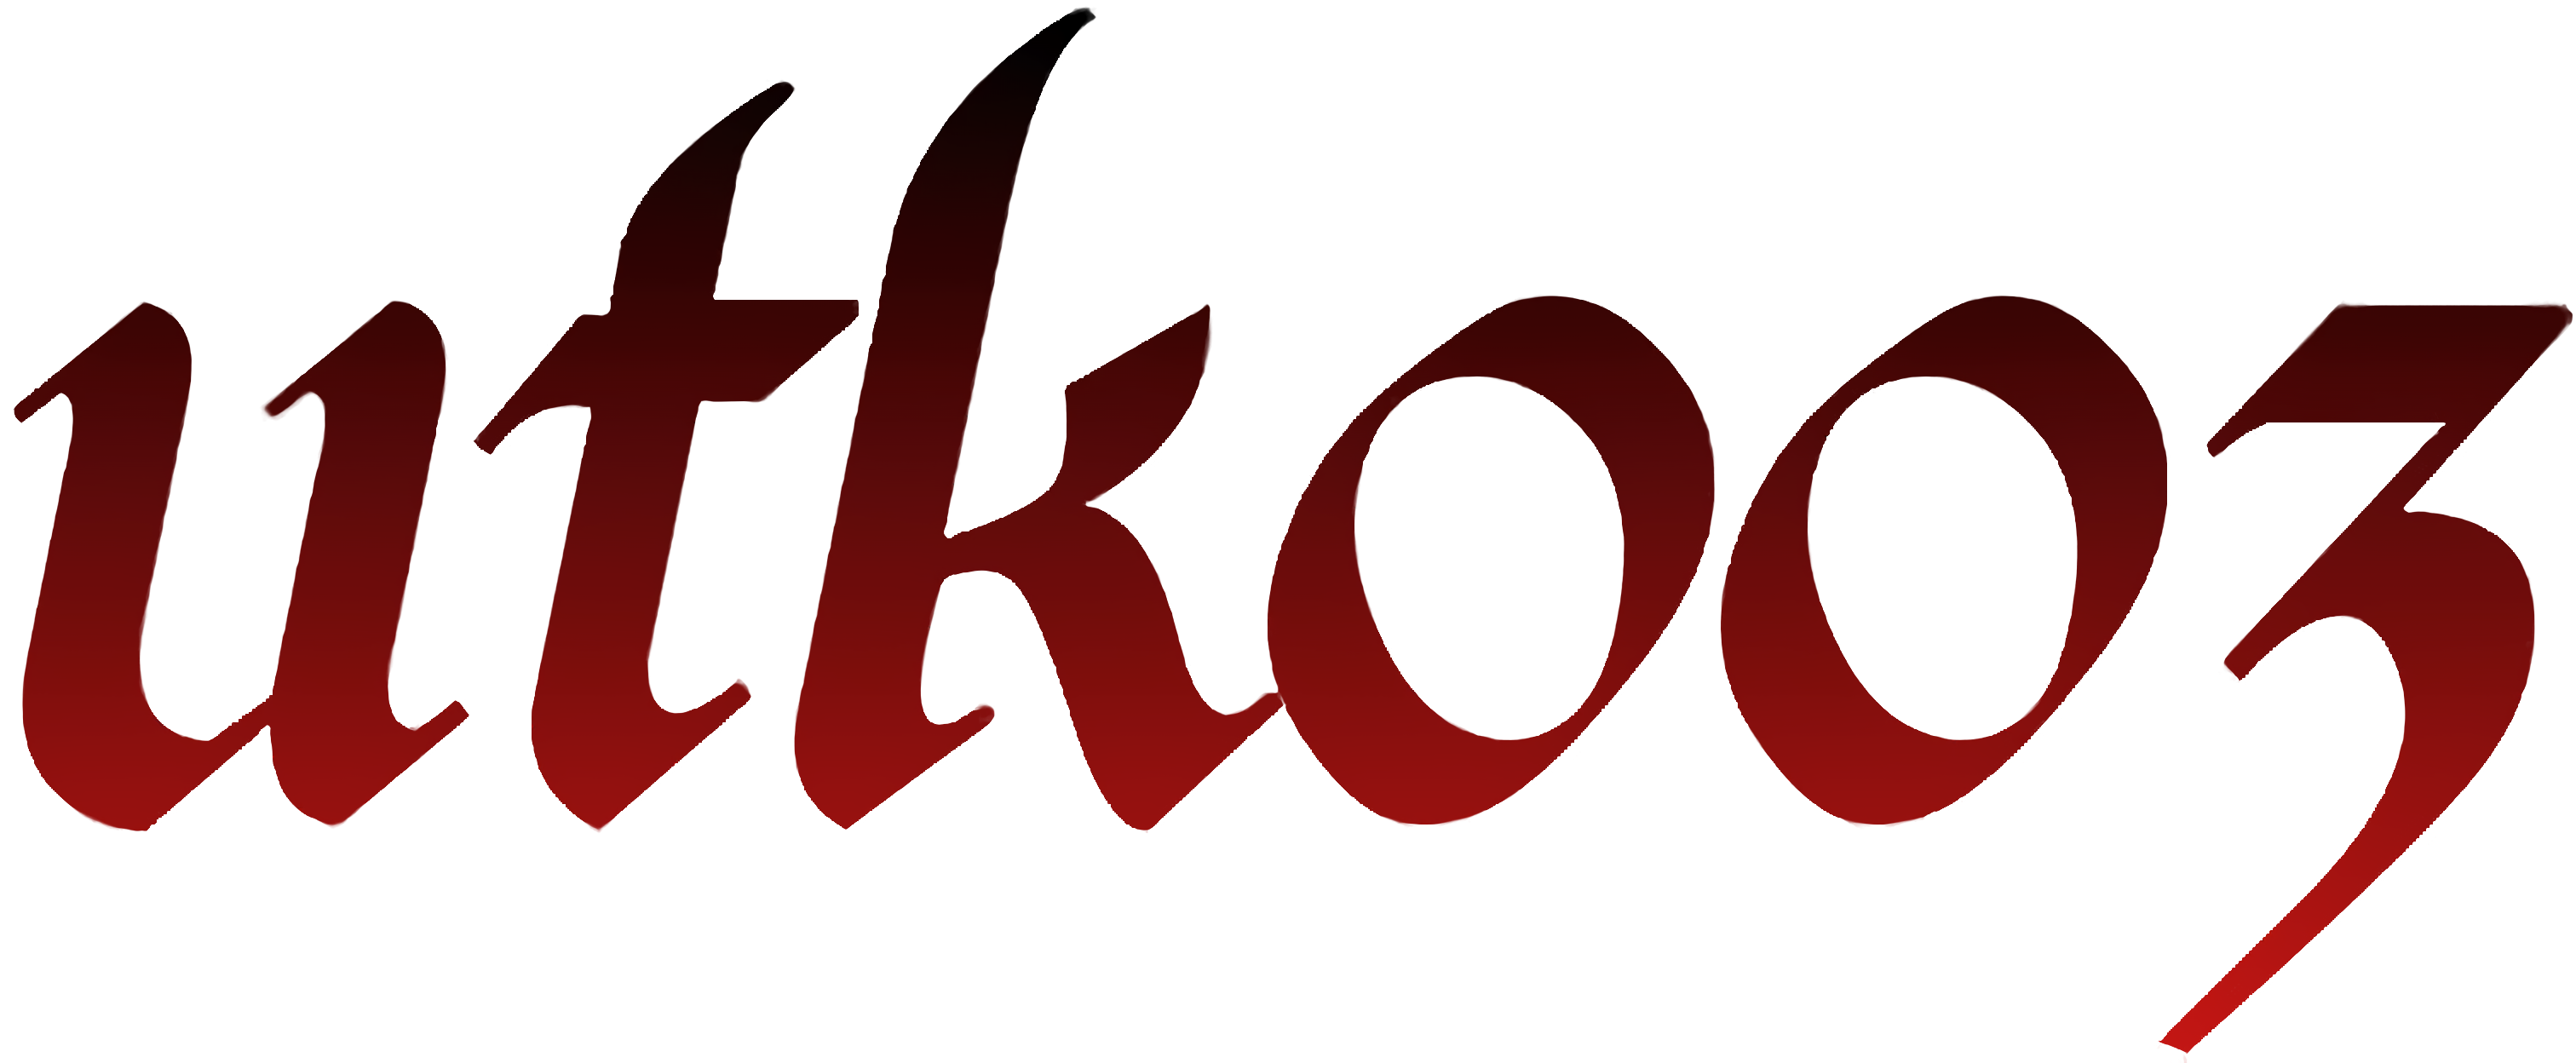 'utk003' Red & Black Calligraphy